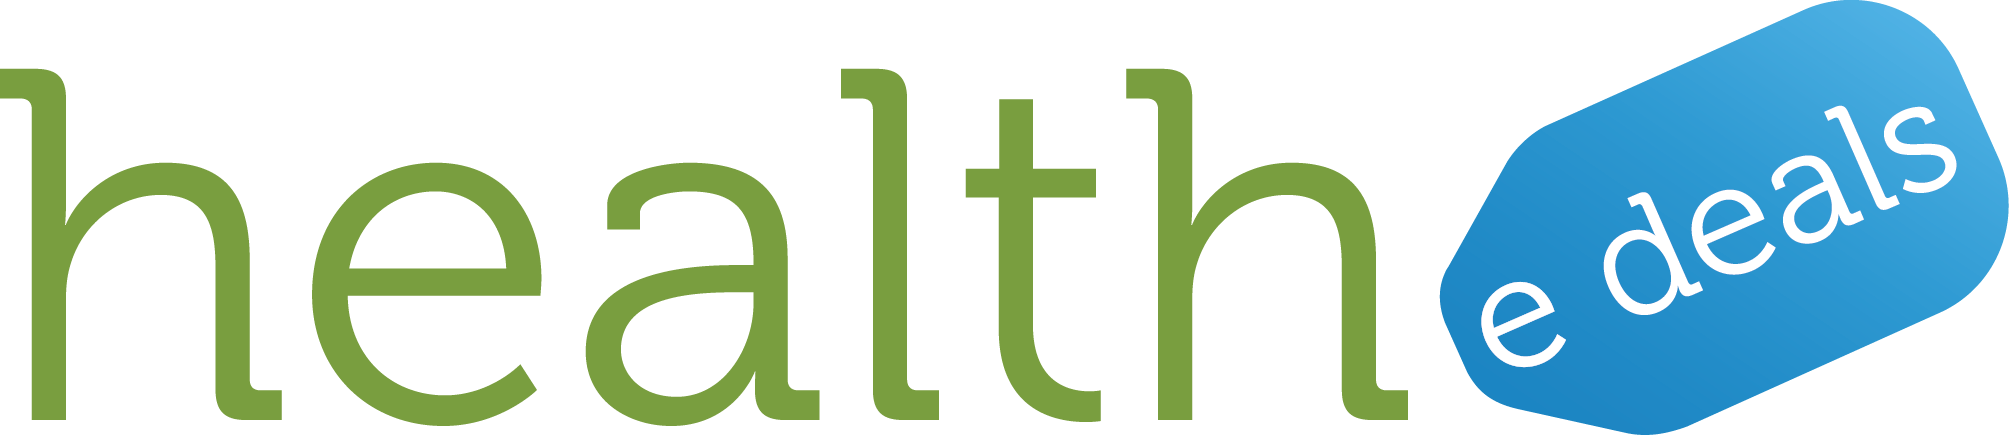 HealtheDeals.com